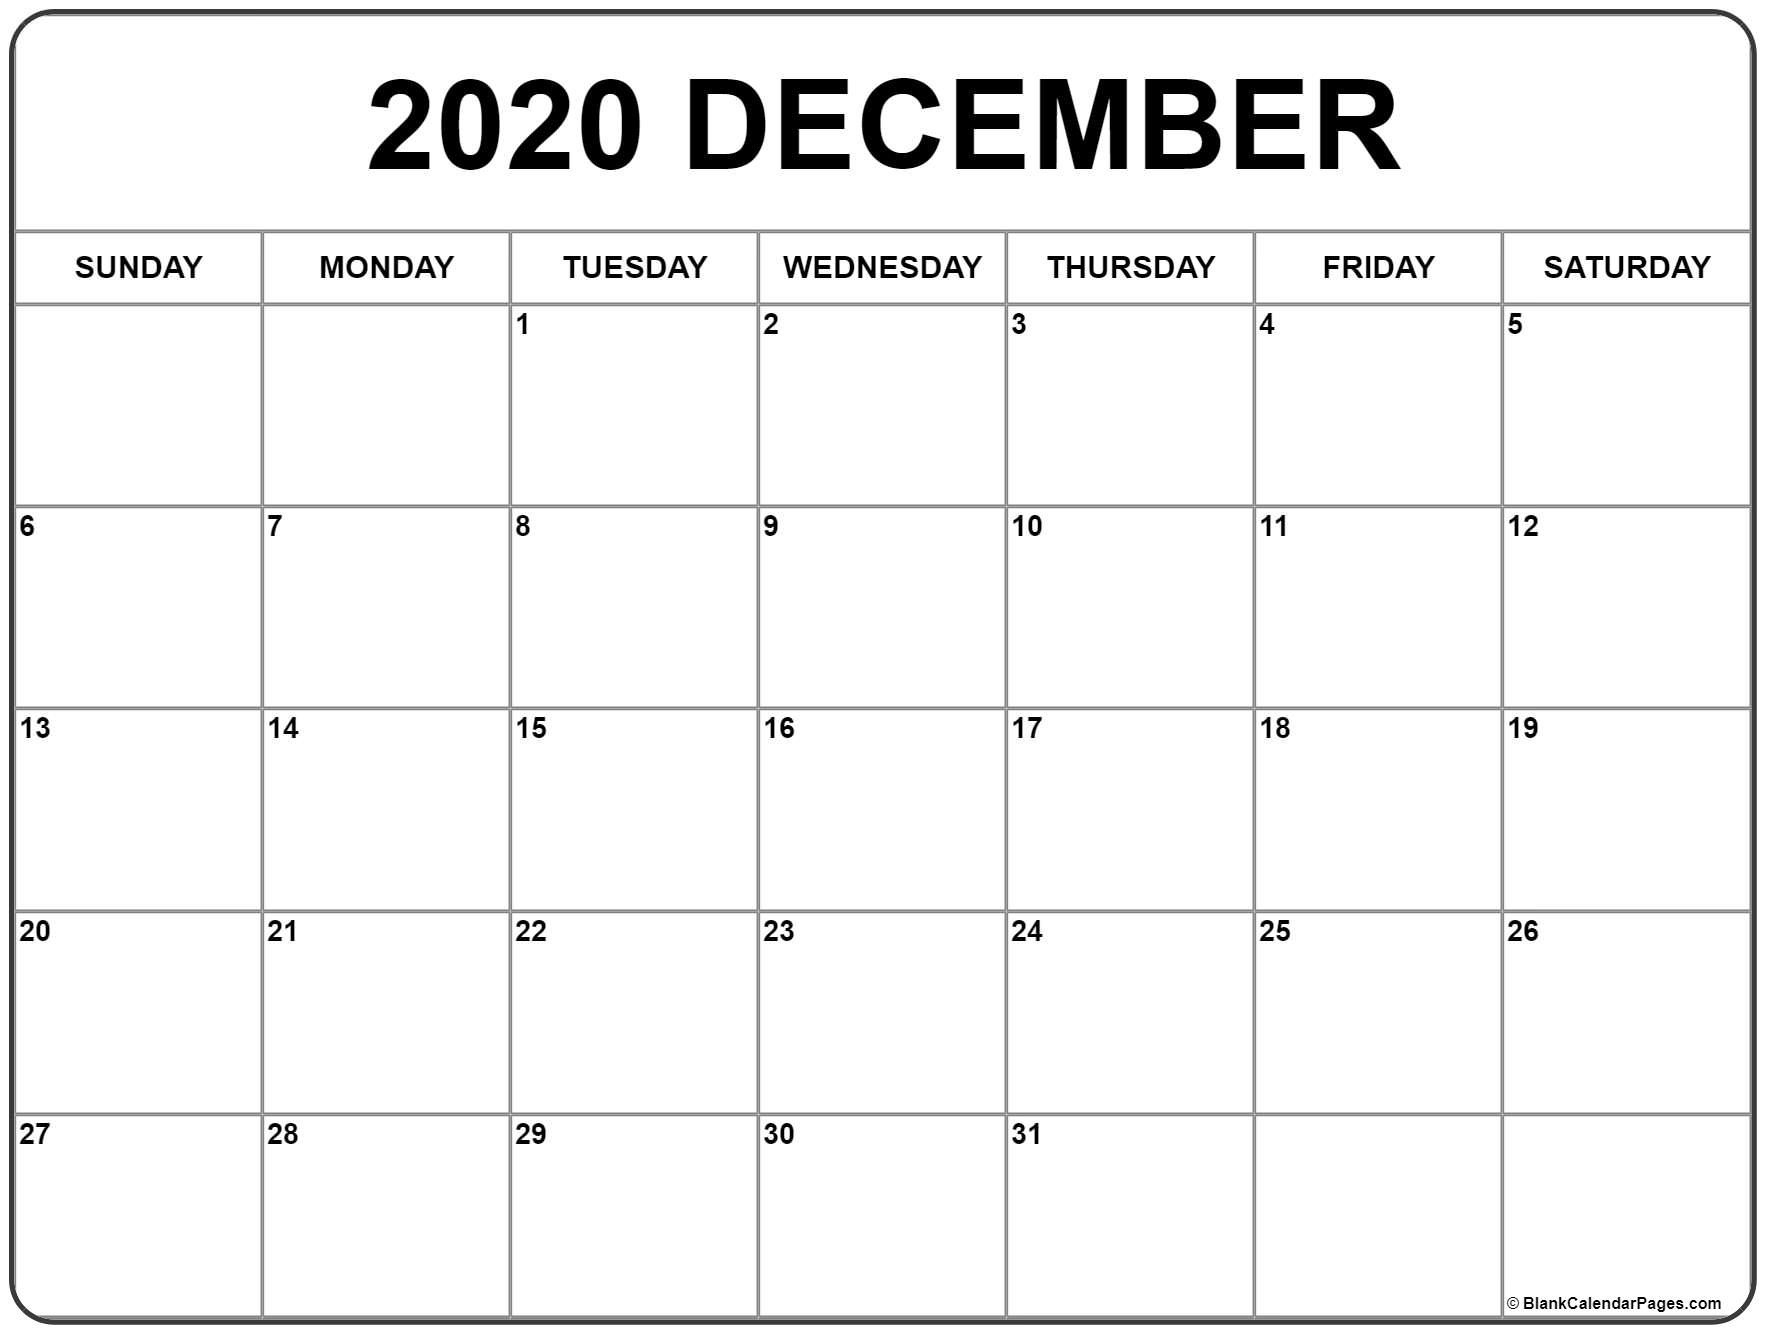 December 2020 Printable Calendar Template #2020Calendars 2020 Calendar To Print